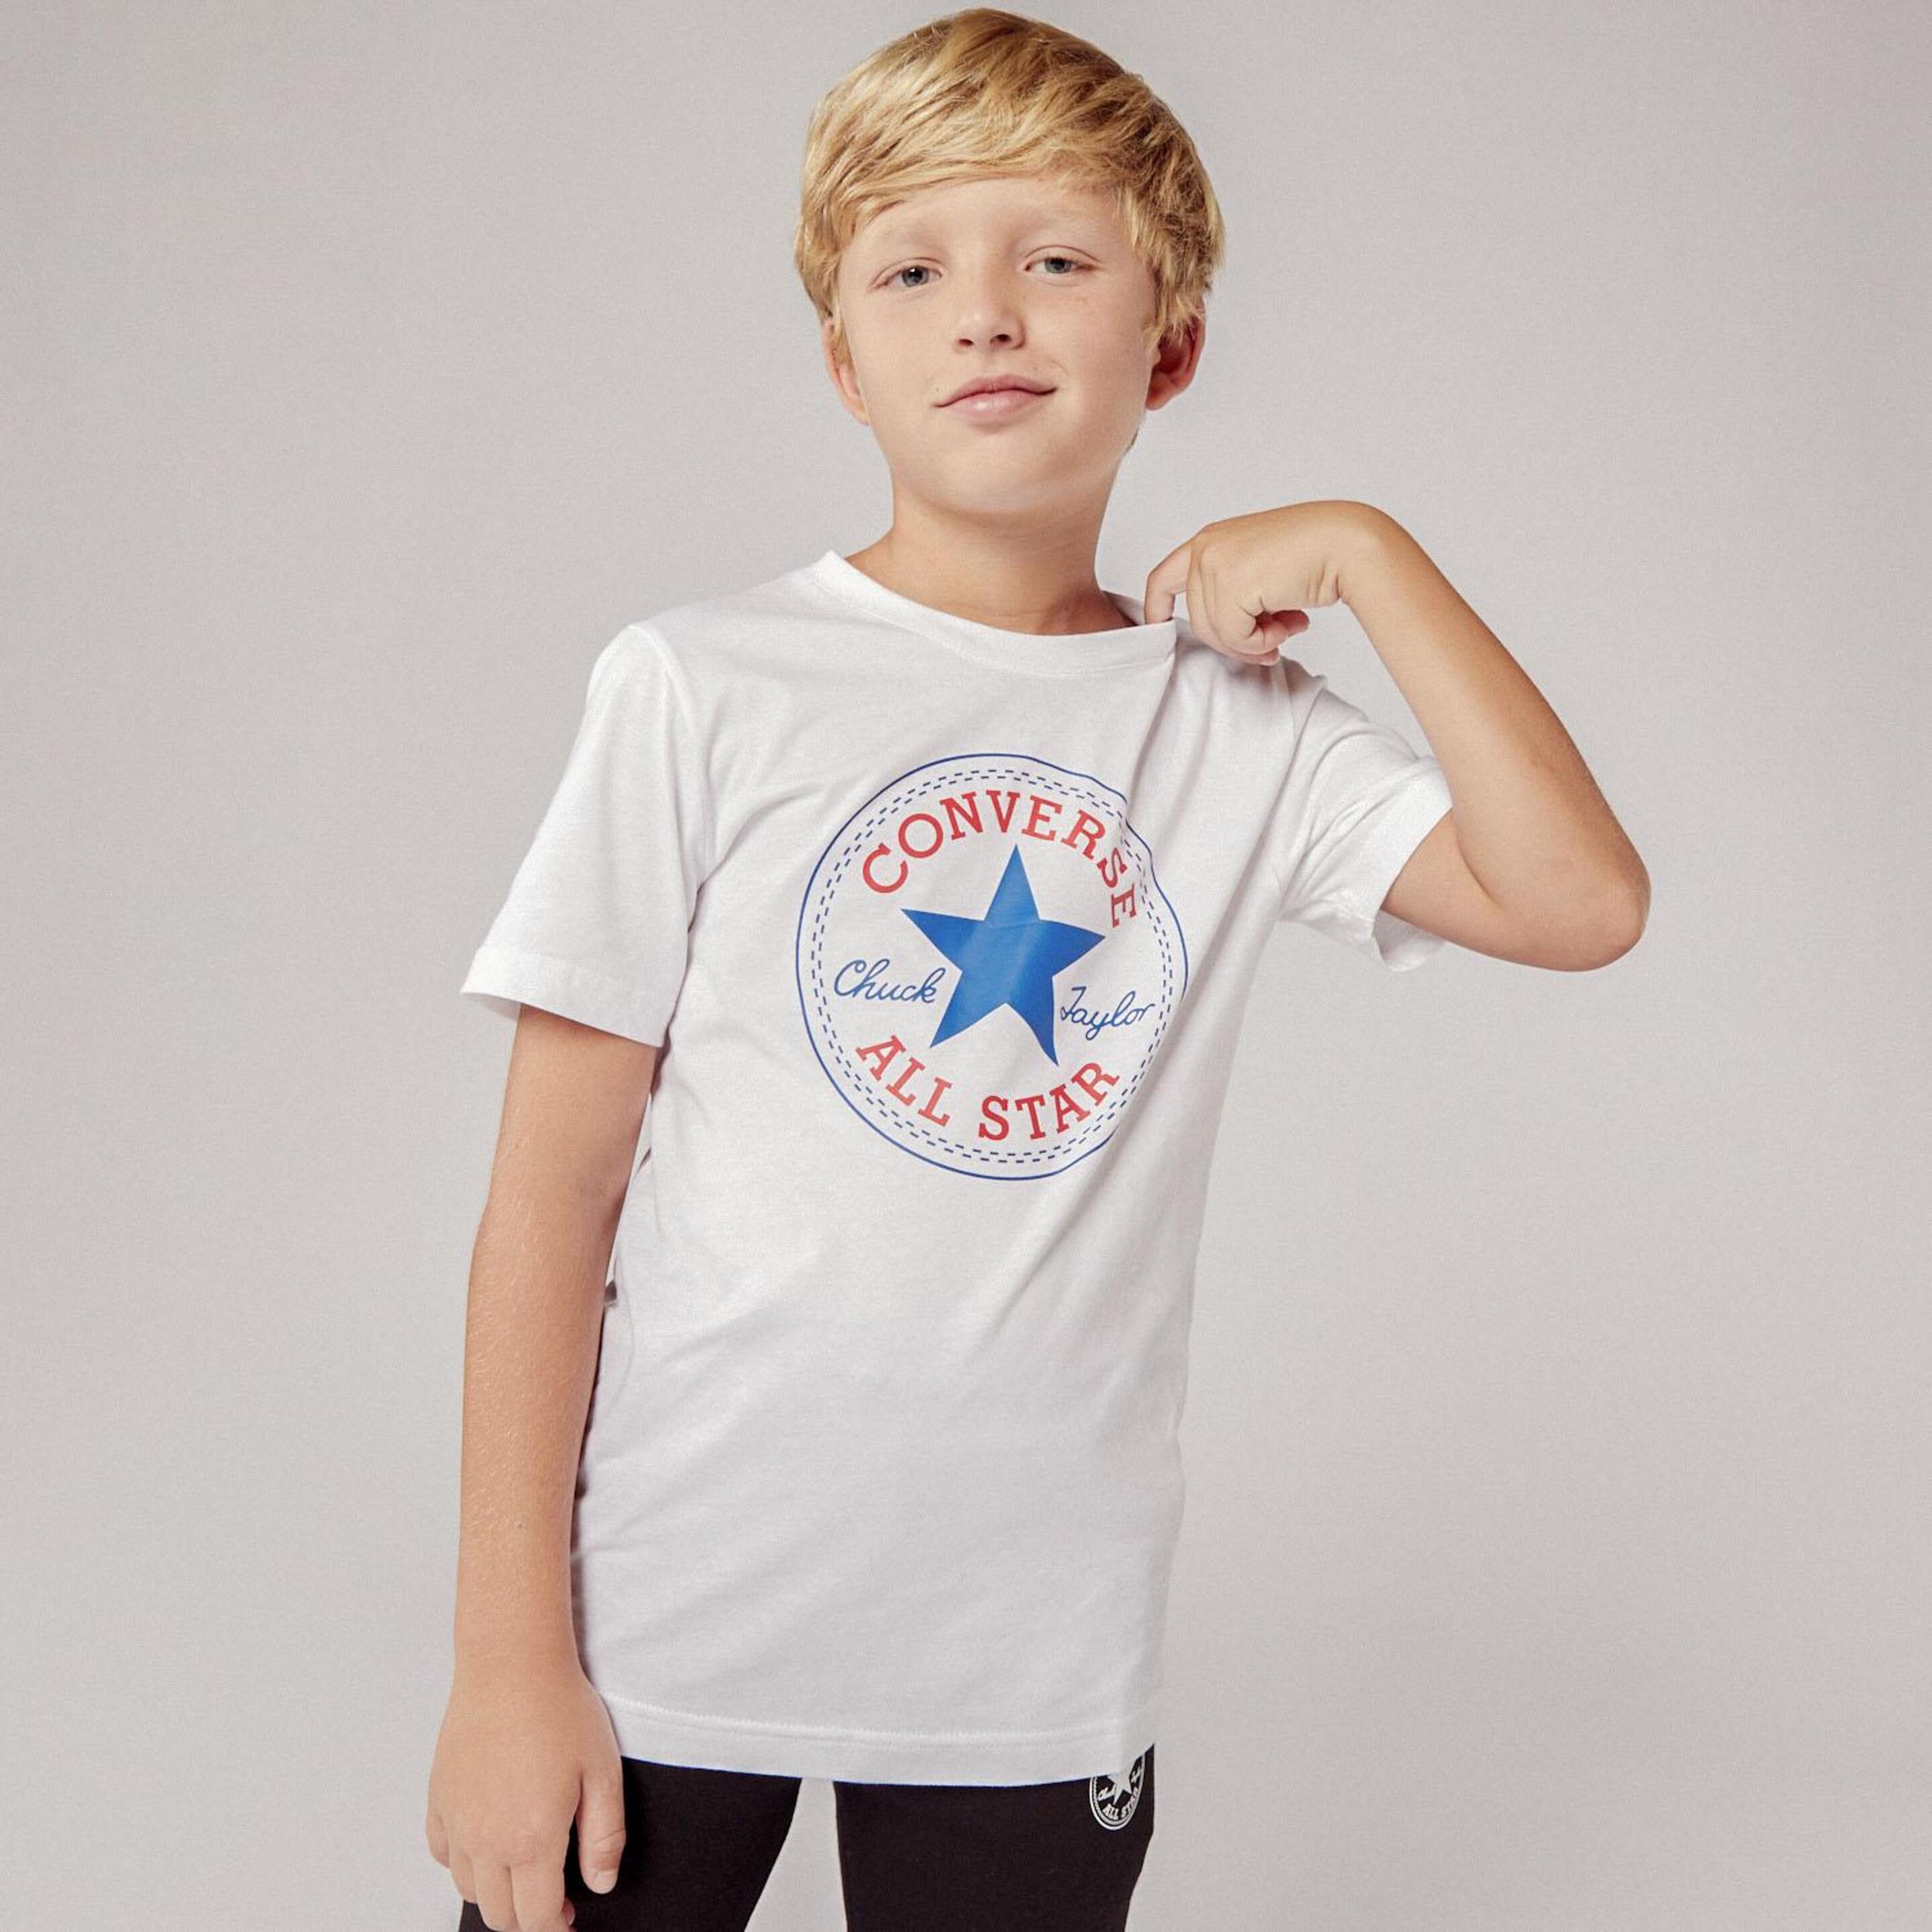 Camiseta Converse - blanco - Camiseta Niño